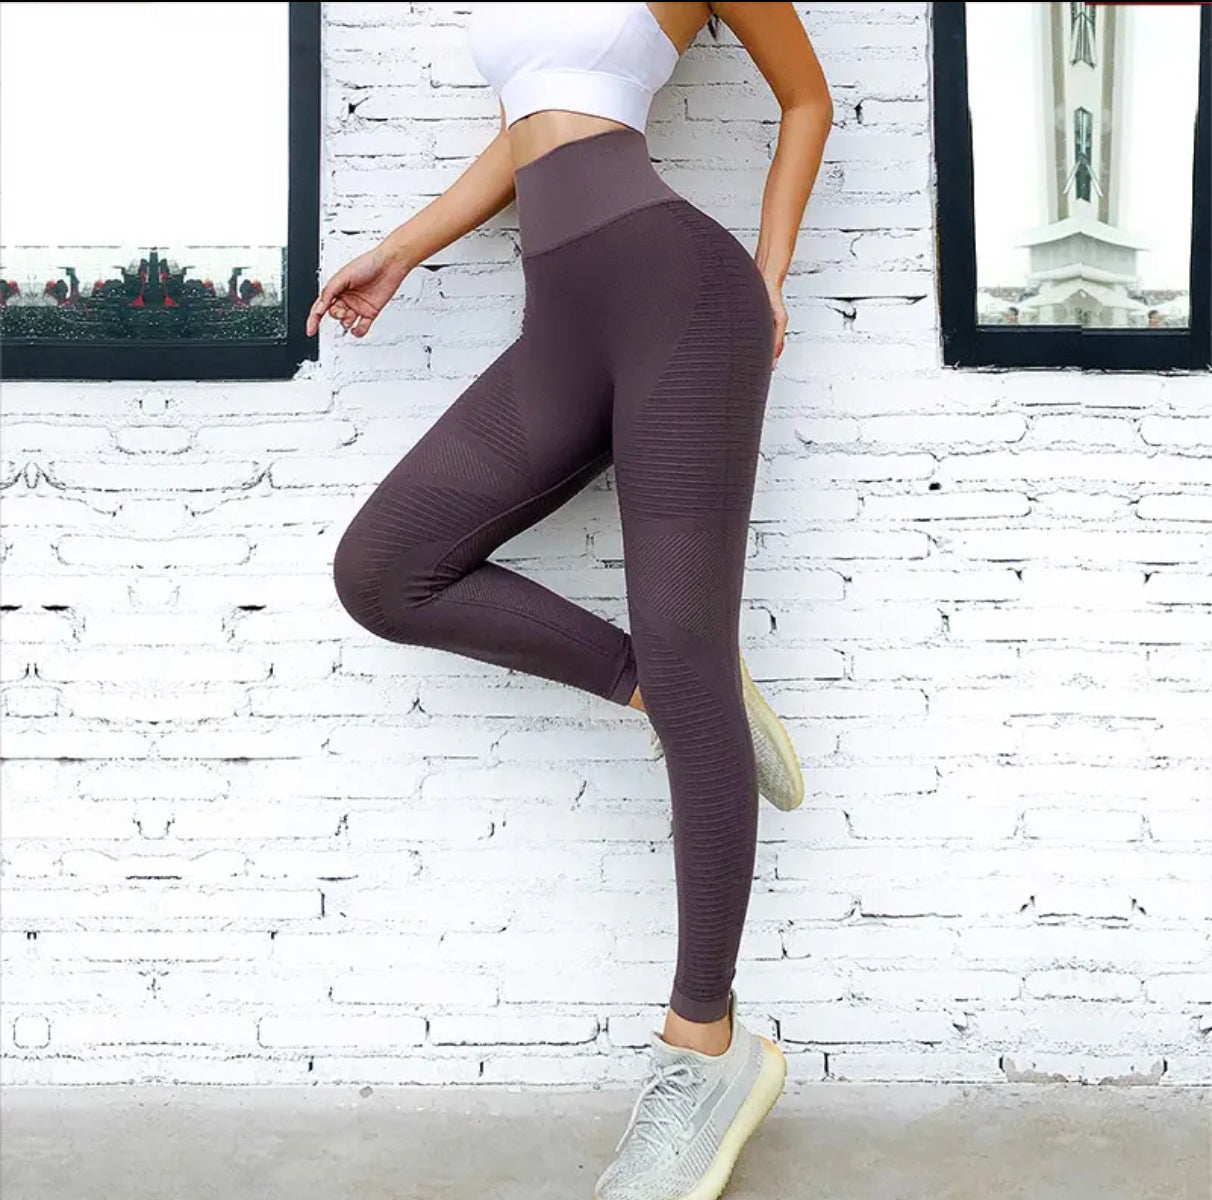 V-Waist Yoga Pants Tummy Control Workout Running Fitness Leggings